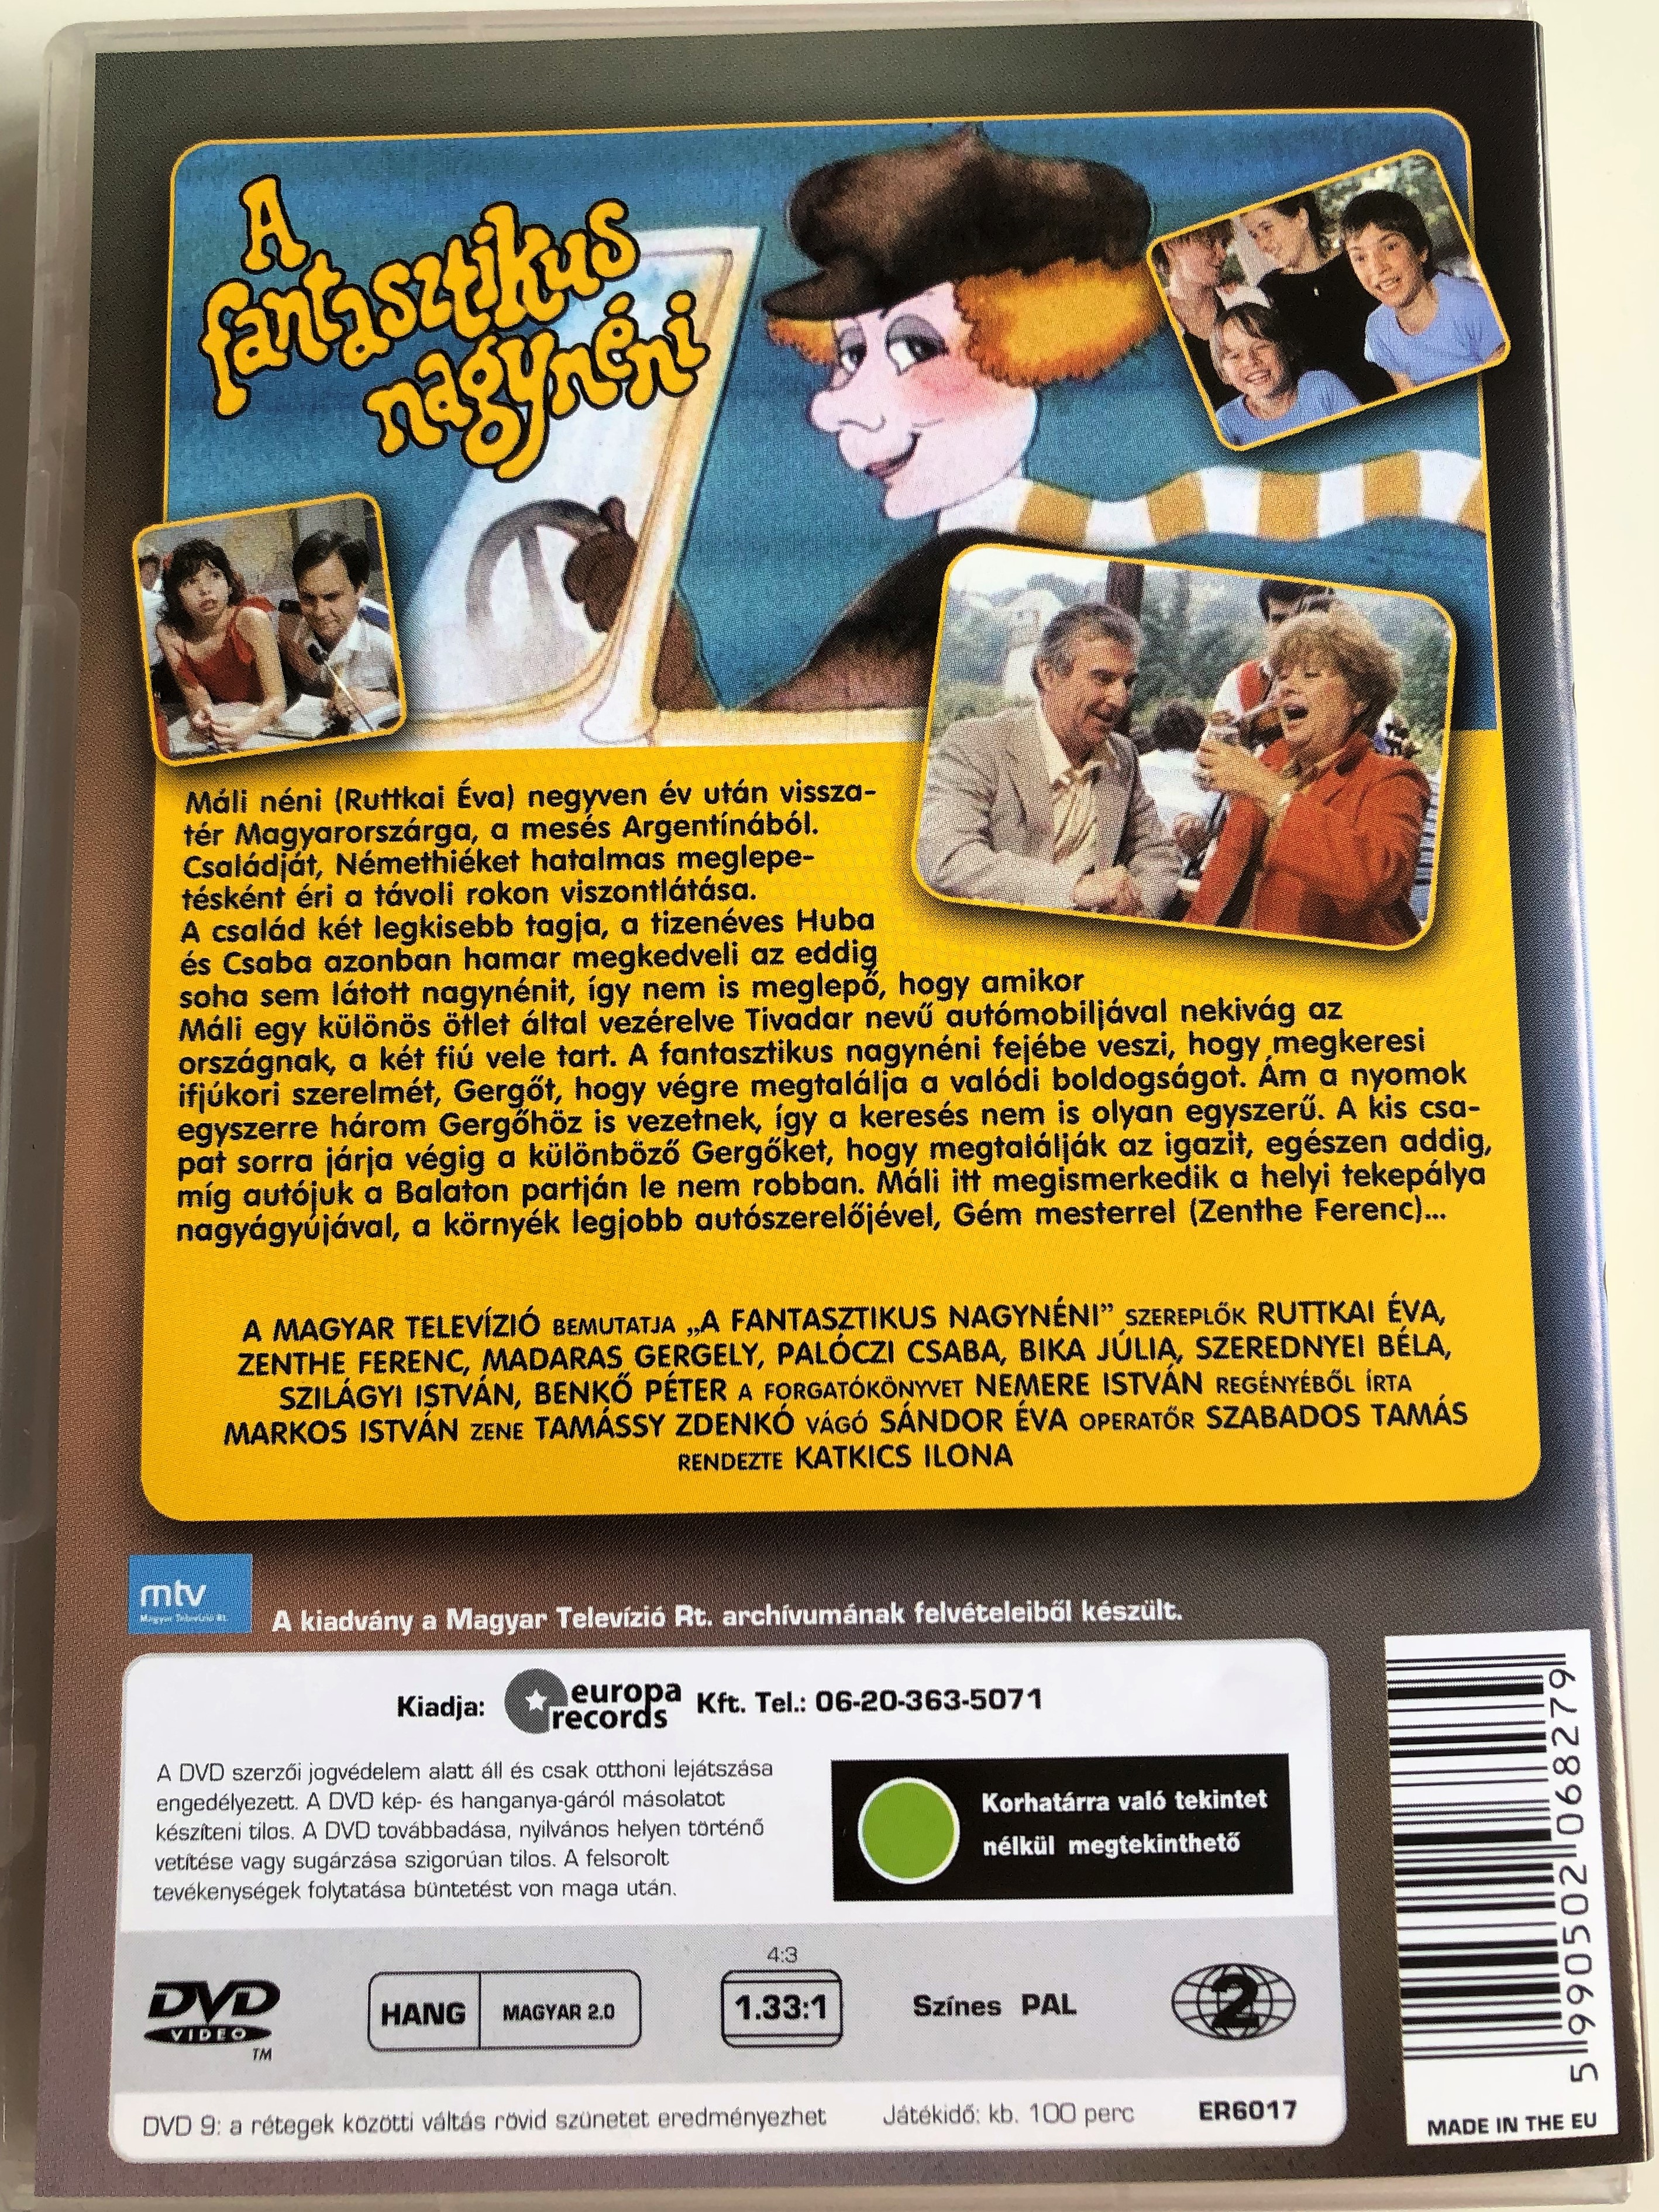 a-fantasztikus-nagyn-ni-dvd-1986-the-fantastic-aunt-directed-by-katkics-ilona-starring-ruttkay-va-zenthe-ferenc-nemere-istv-n-reg-ny-b-l-2-.jpg